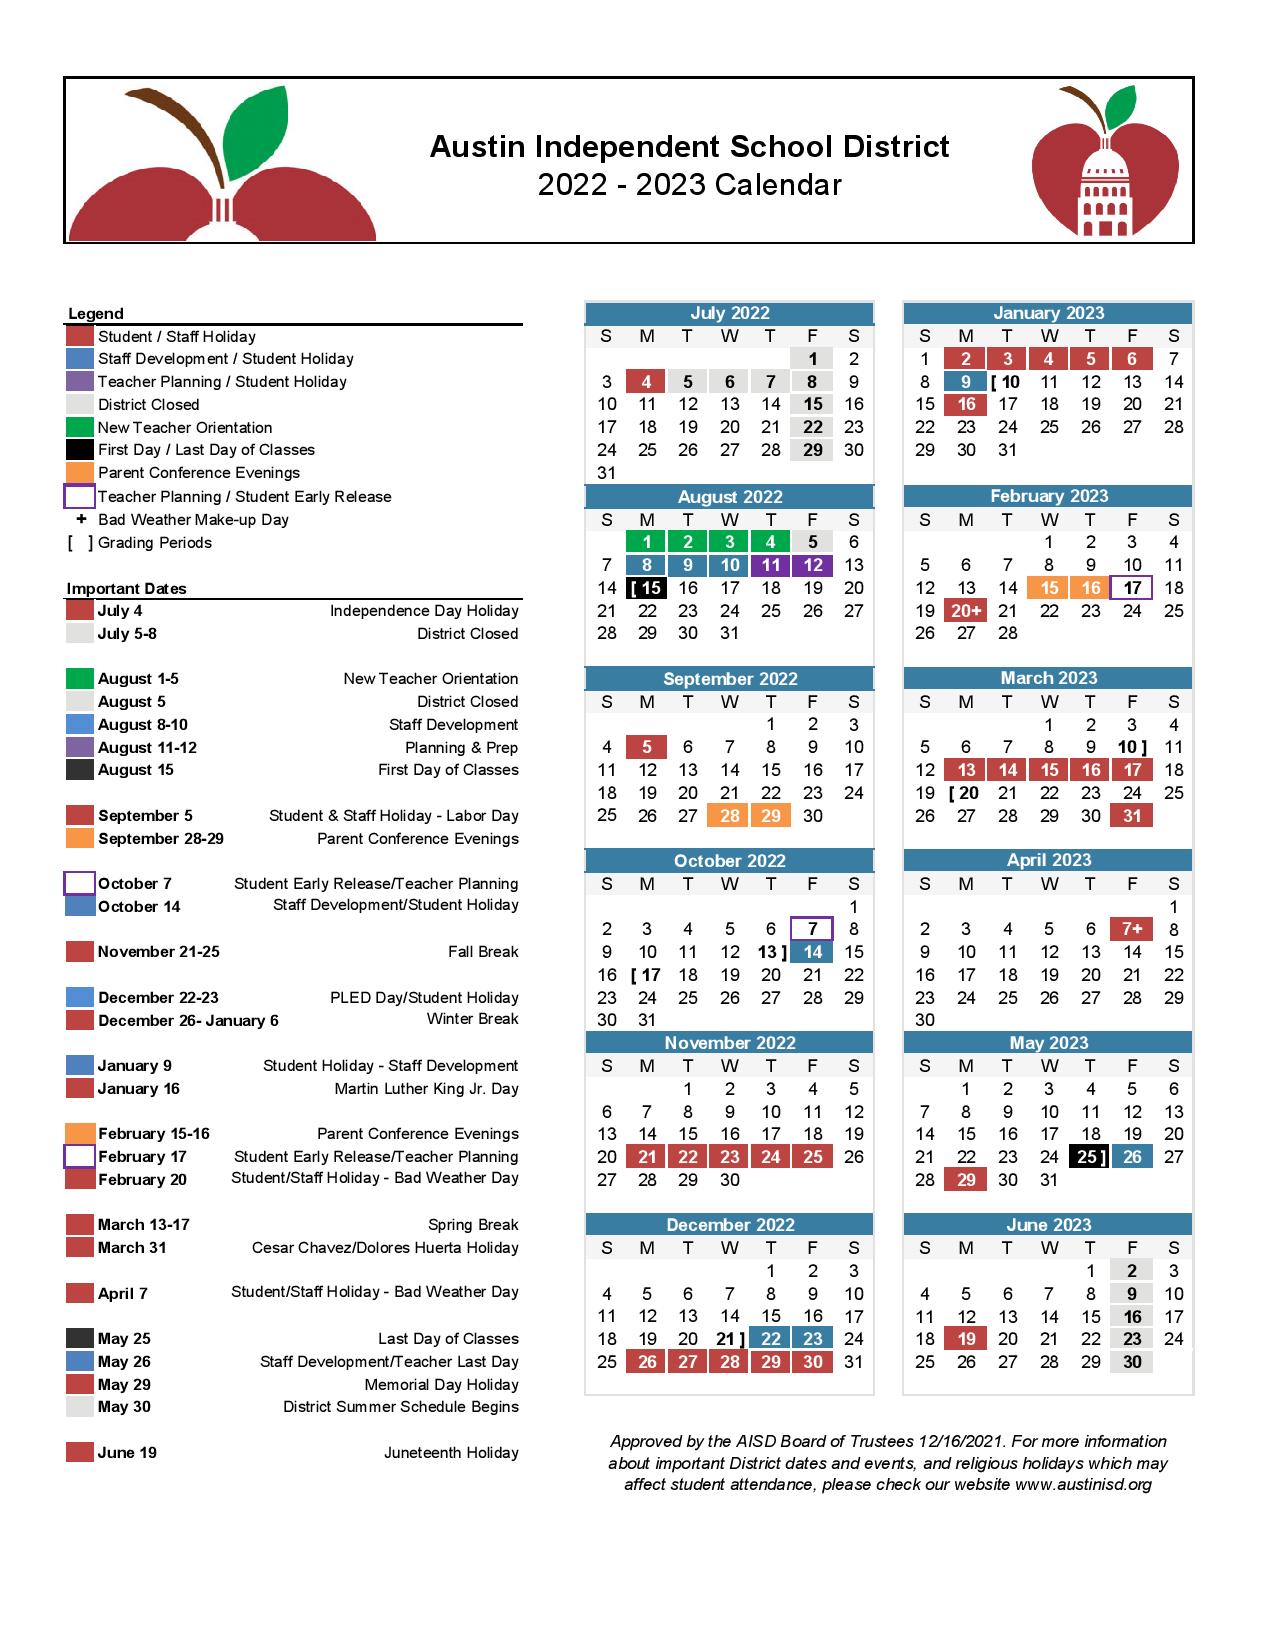 Austin Independent School District Calendar Holidays 2022-2023